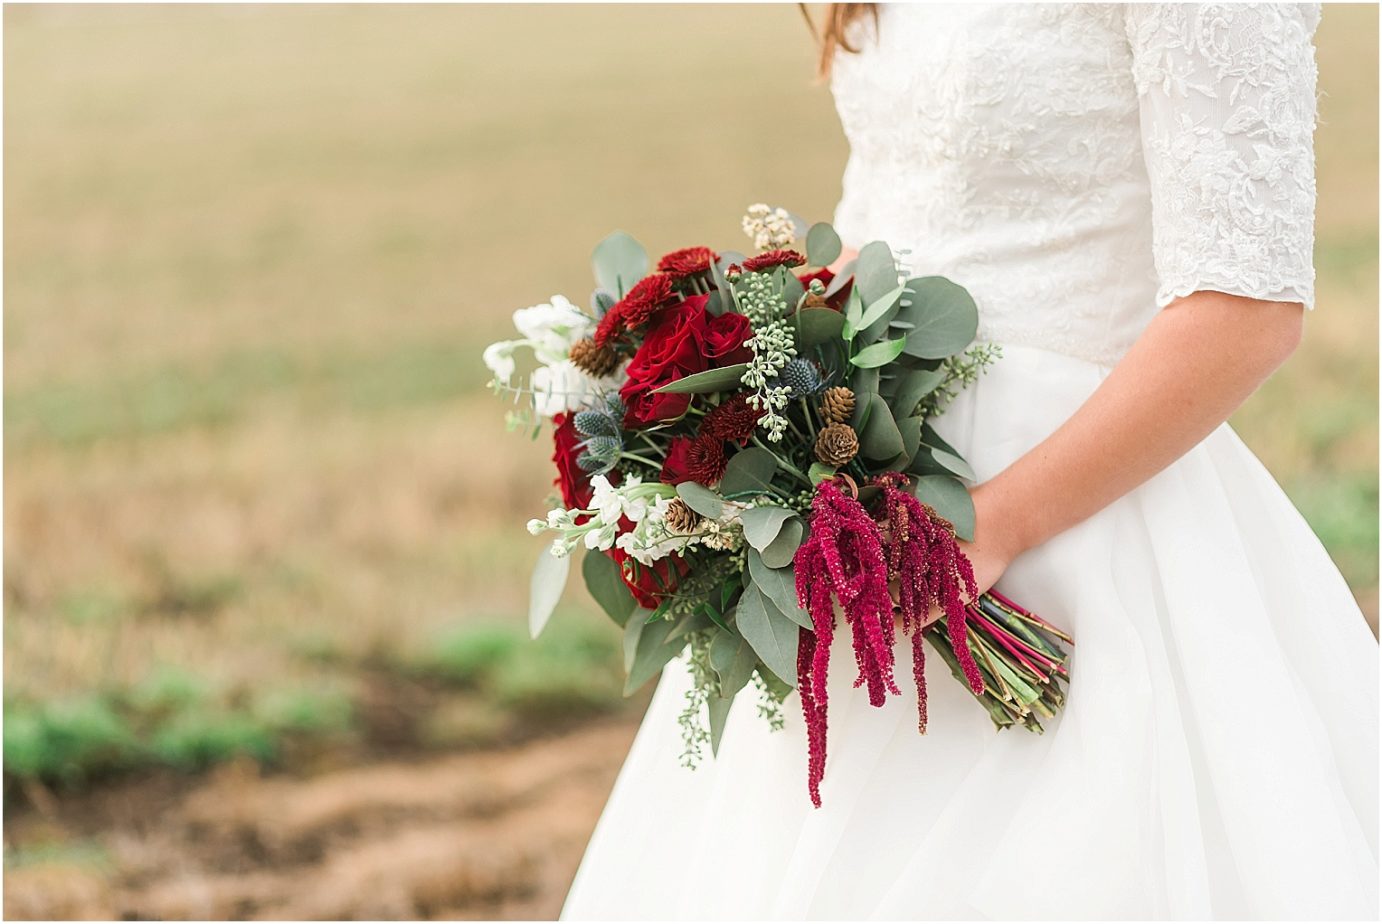 Ellensburg backyard wedding- bride in a modest wedding dress with maroon flowers